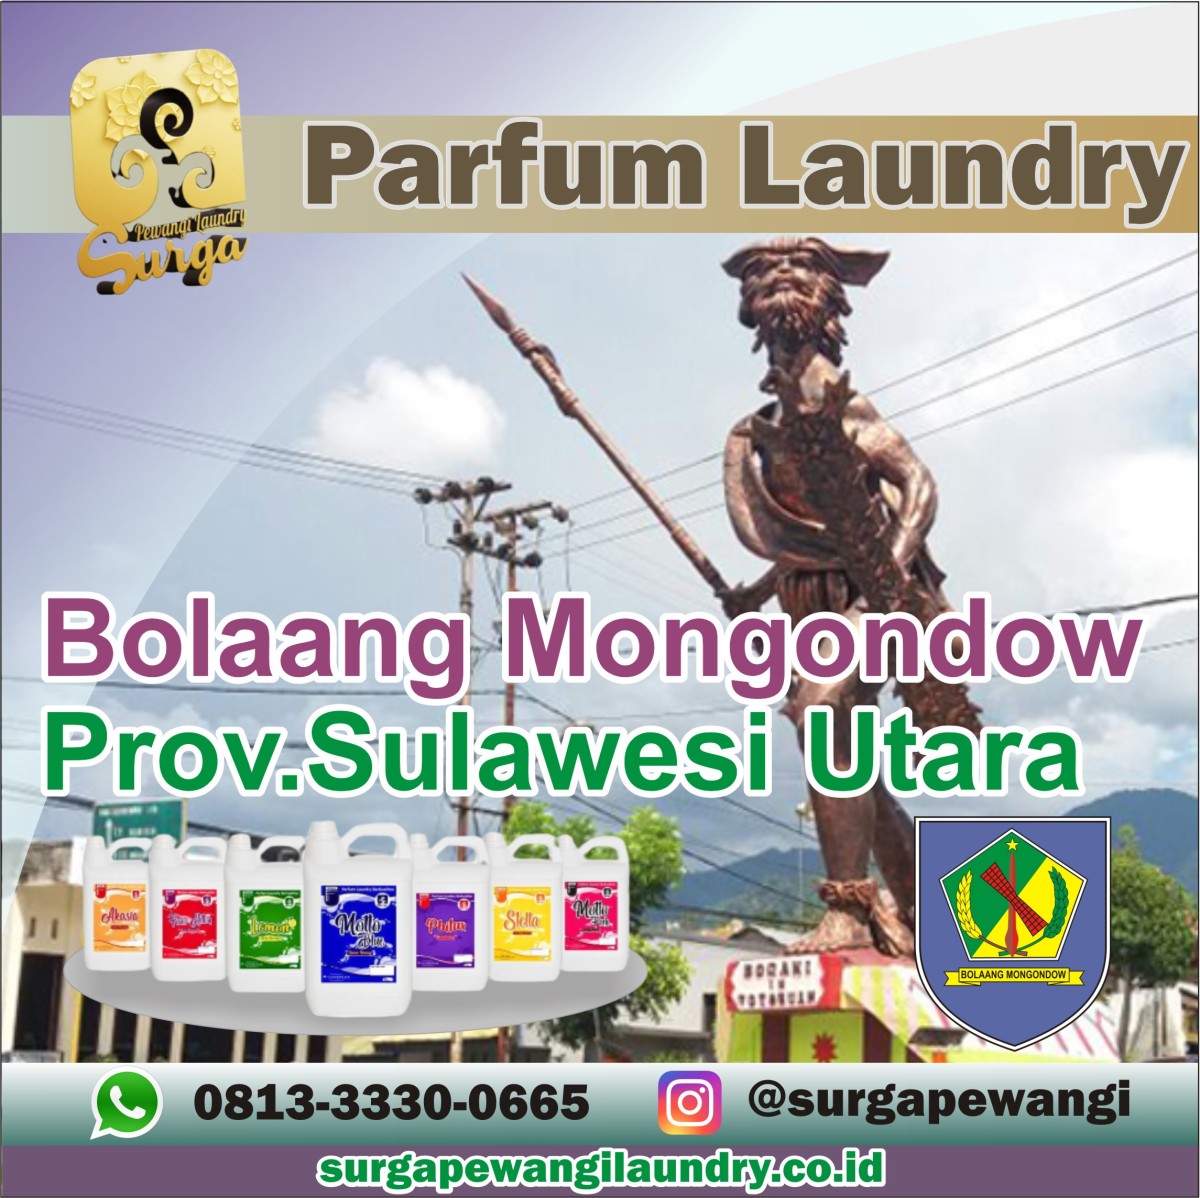 Parfum Laundry Kabupaten Bolaang Mongondow, Sulawesi Utara